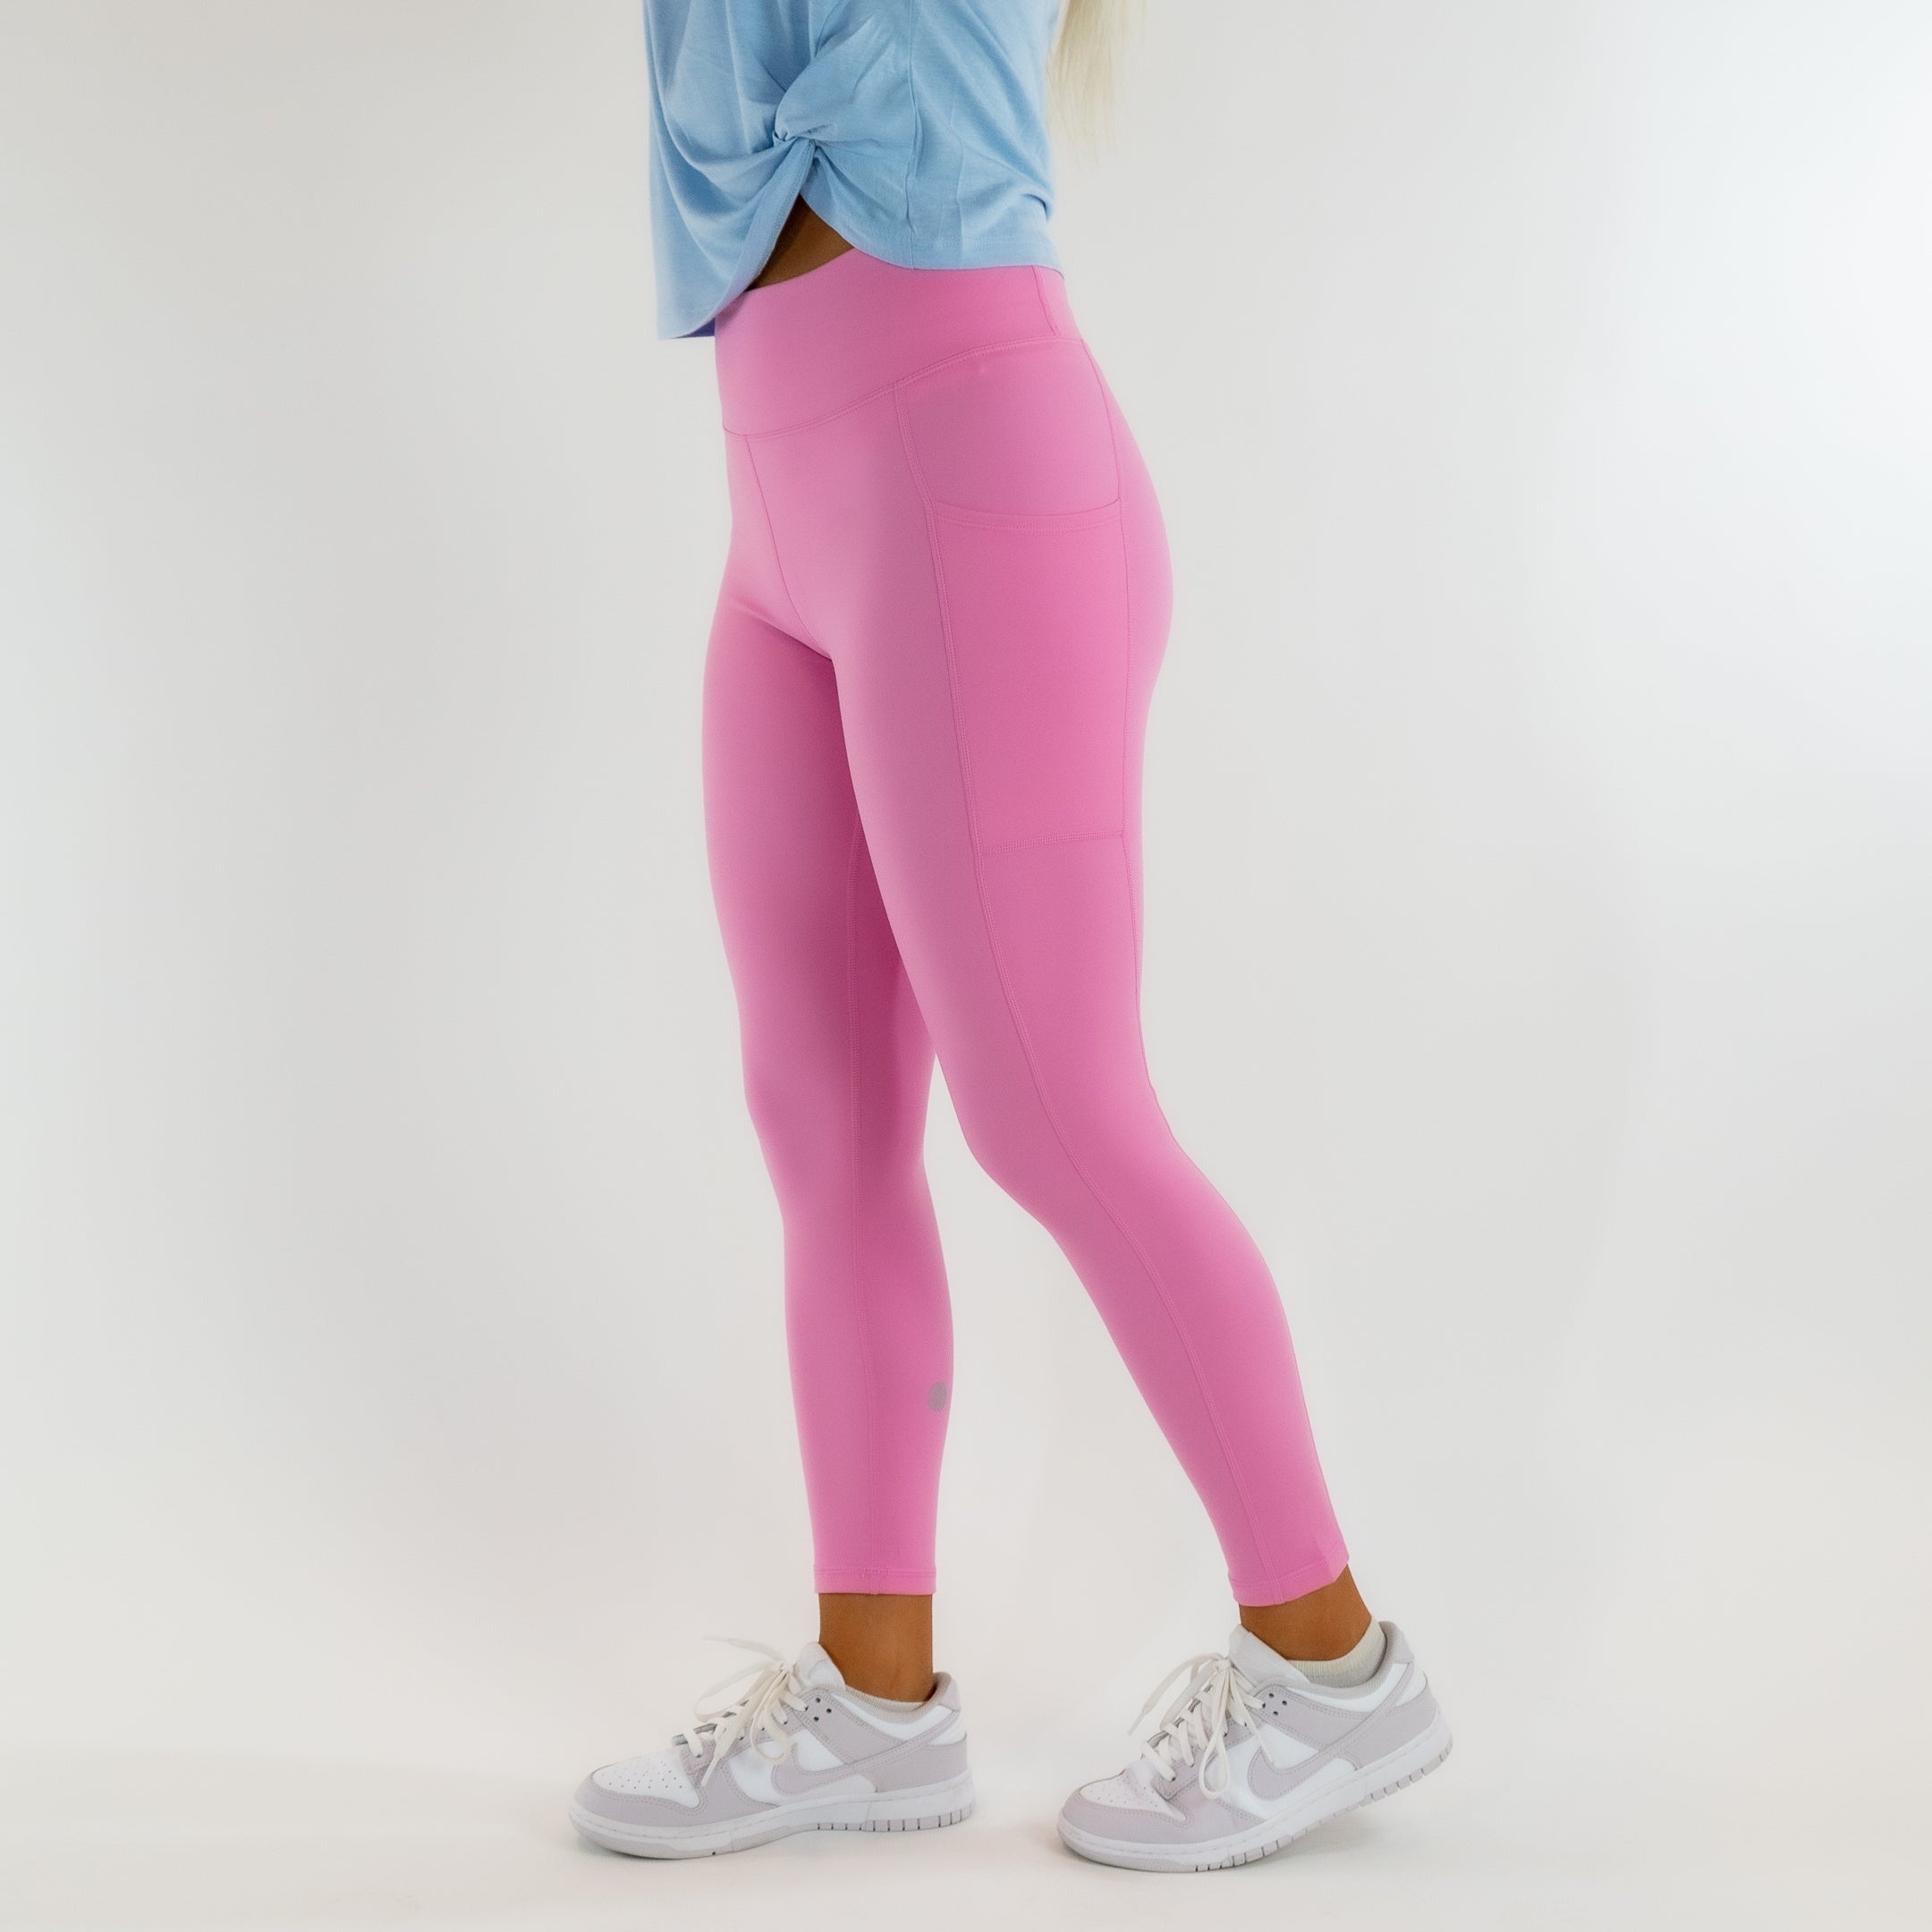 Molikka flared leggings in pink - Rotate